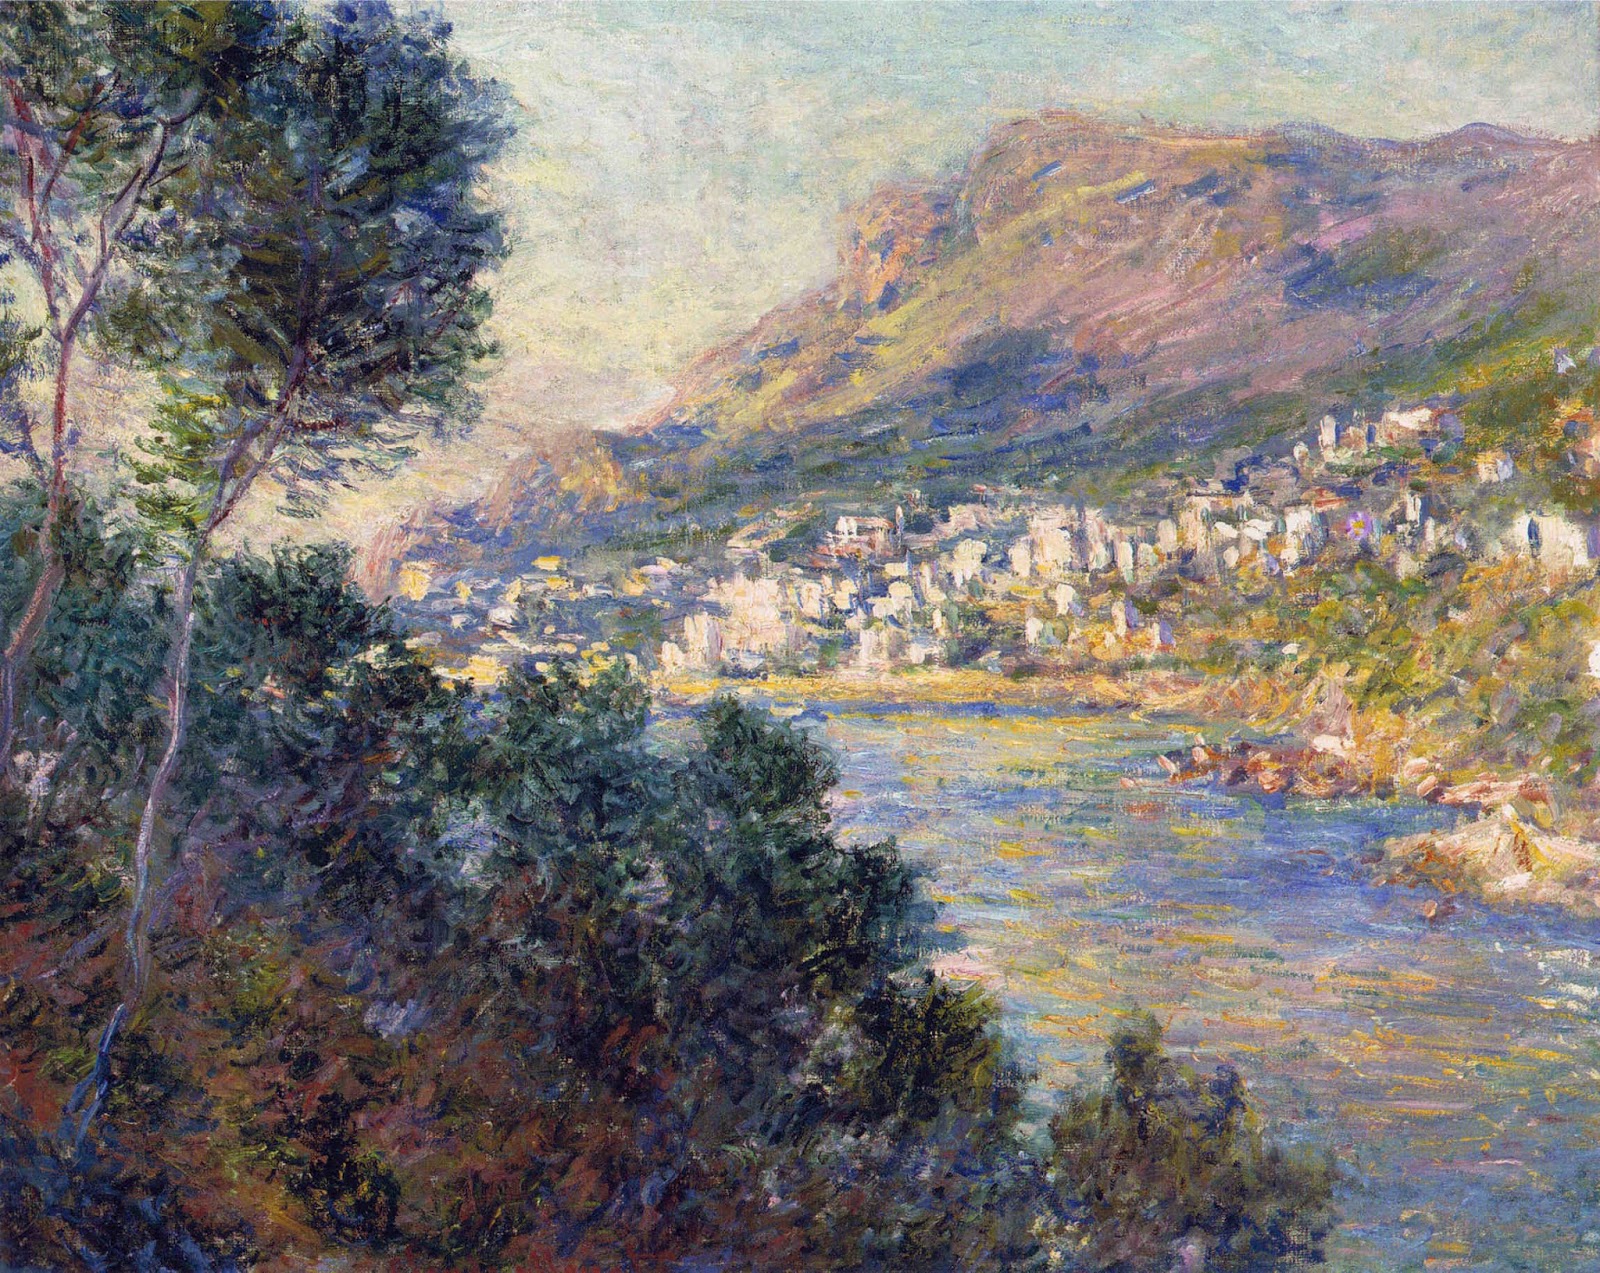 Claude+Monet-1840-1926 (535).jpg